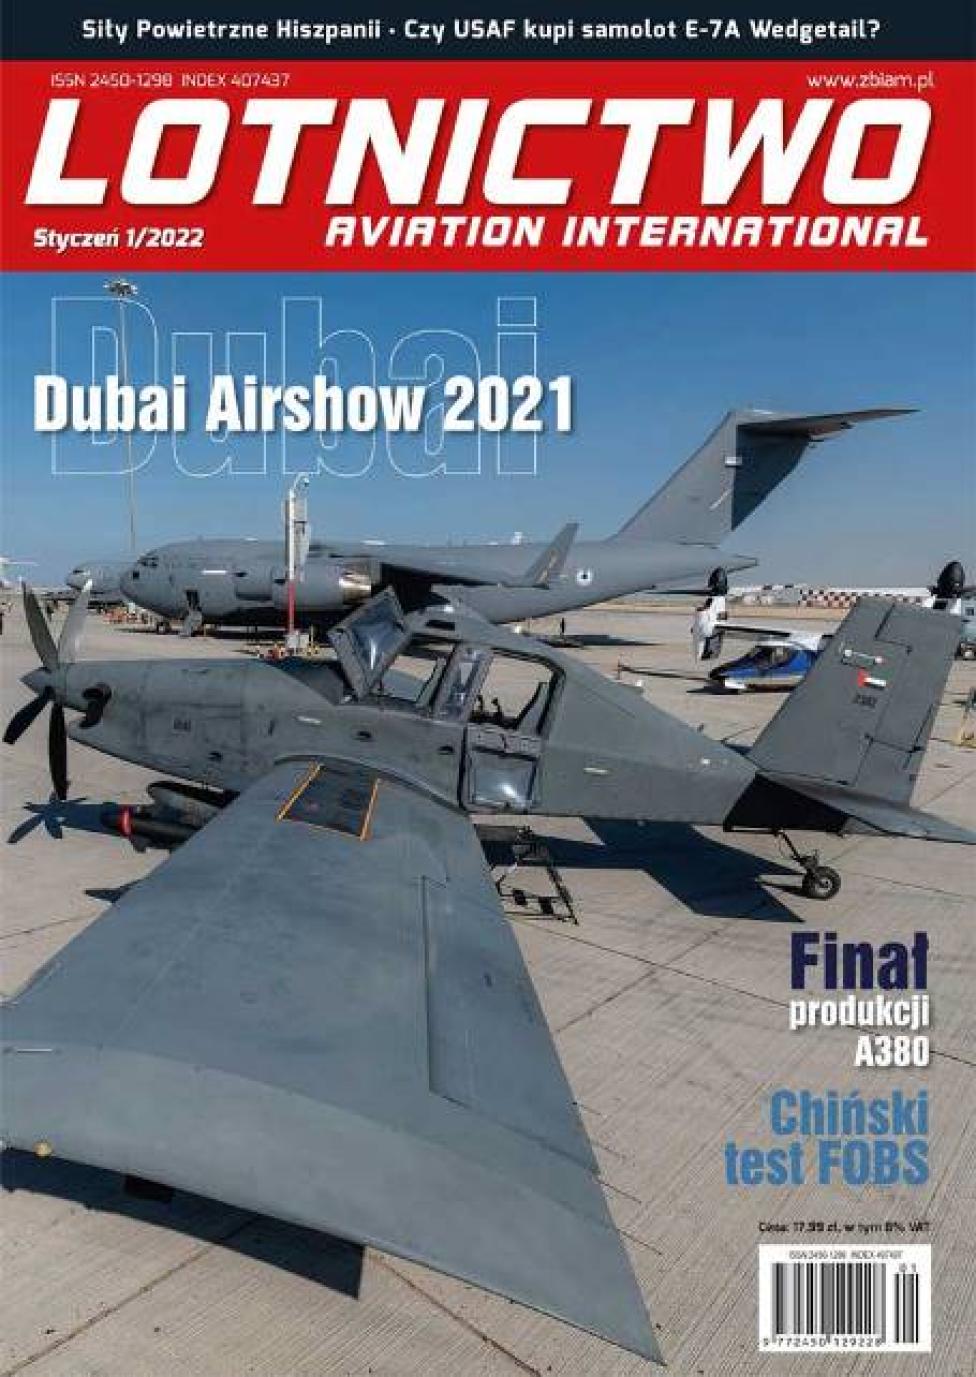 Lotnictwo Aviation International 1/2022